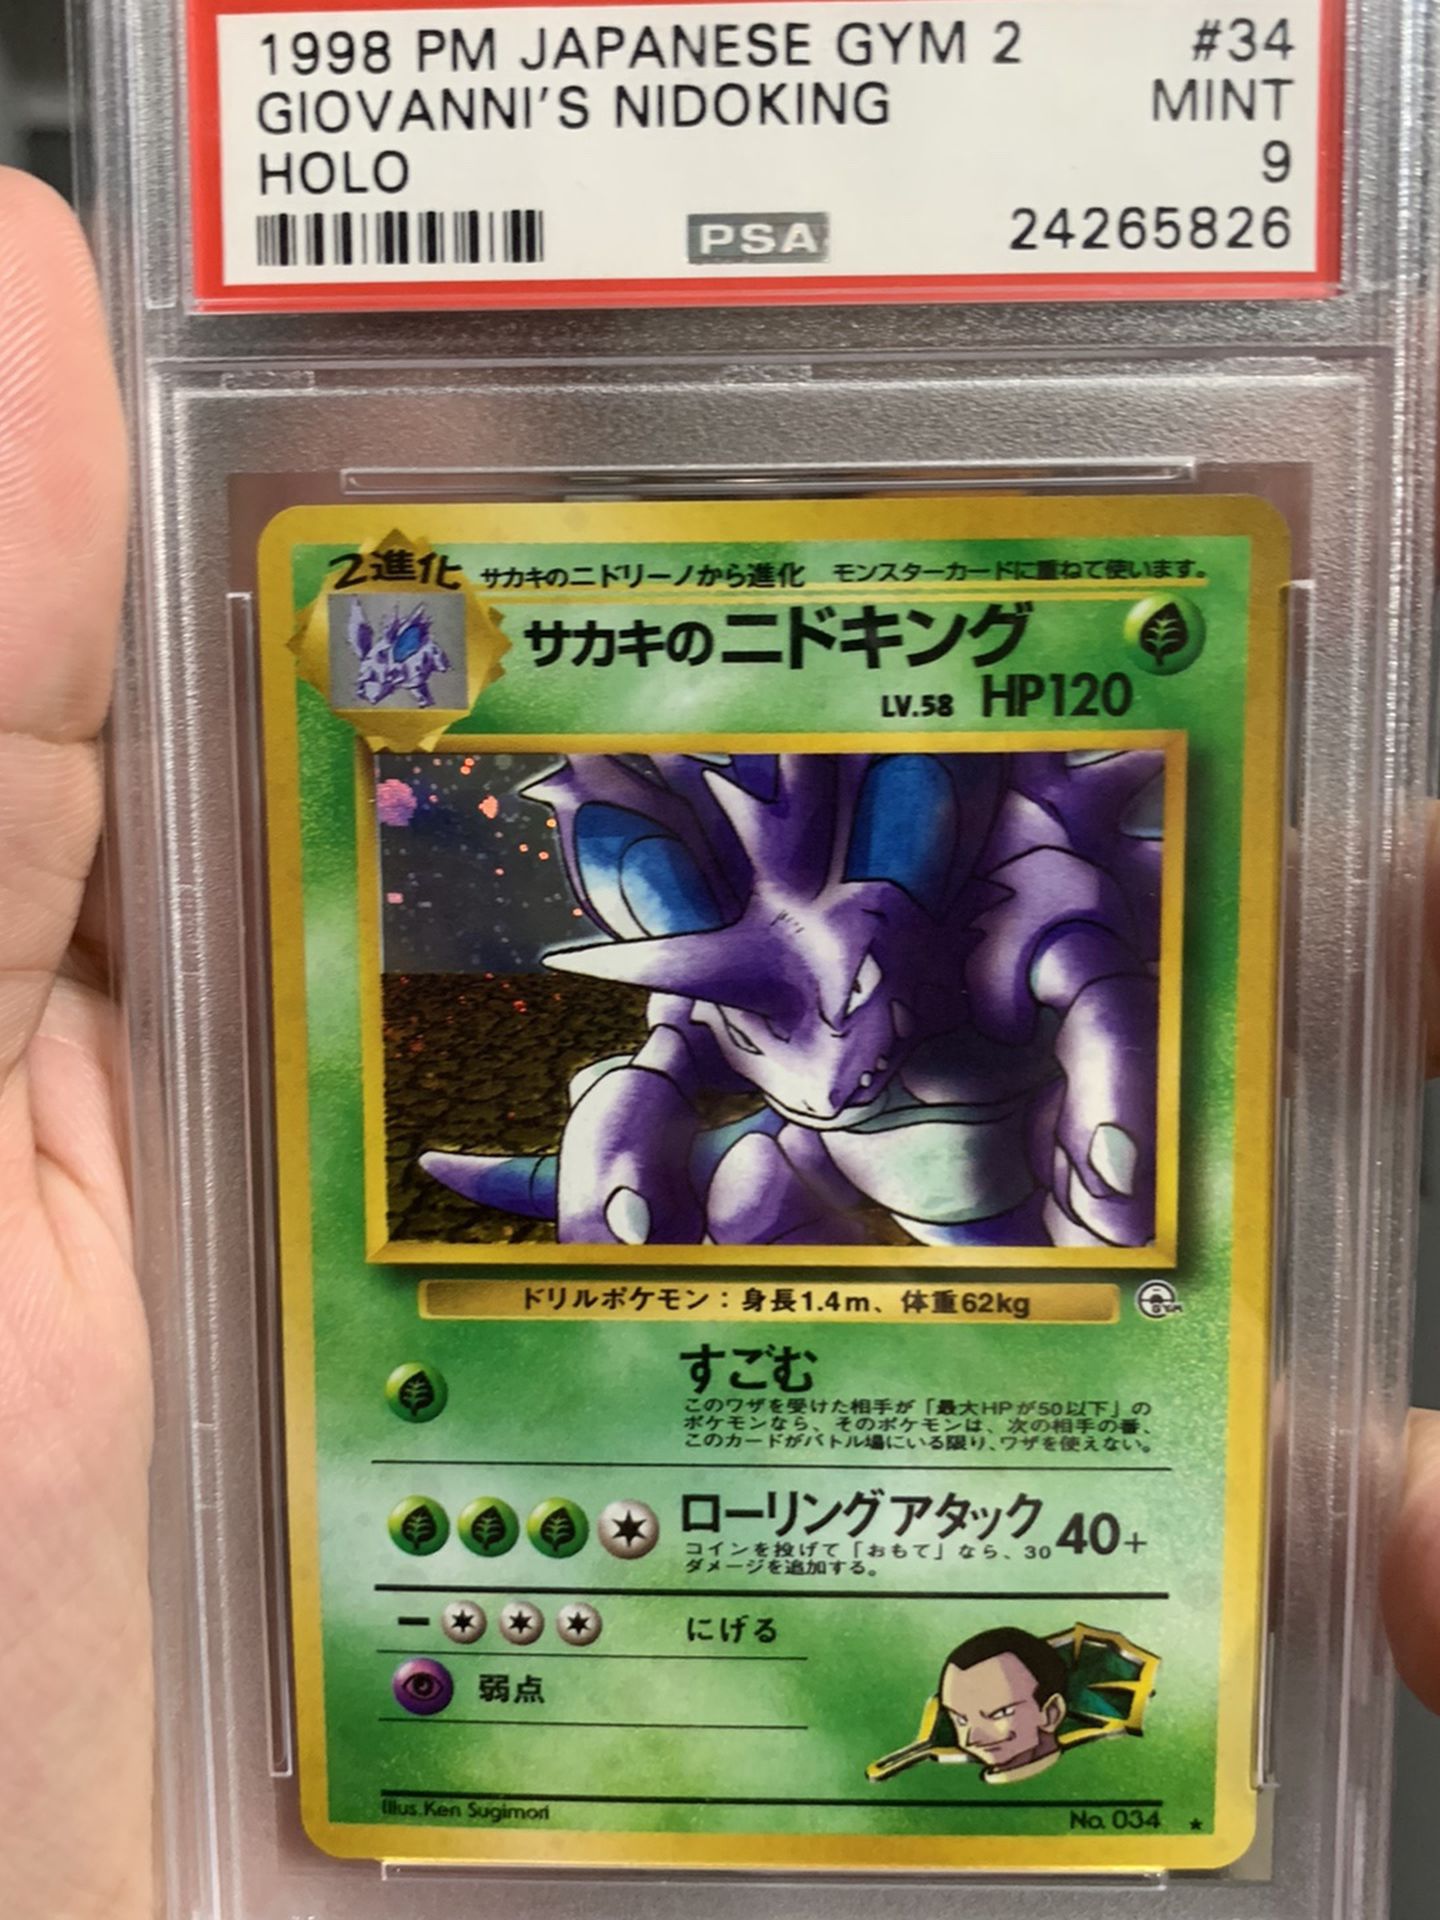 Vintage Japanese Pokémon Card from 1998 PSA 9 Giovanni’s Nidoking (East Bay Area Meetups)